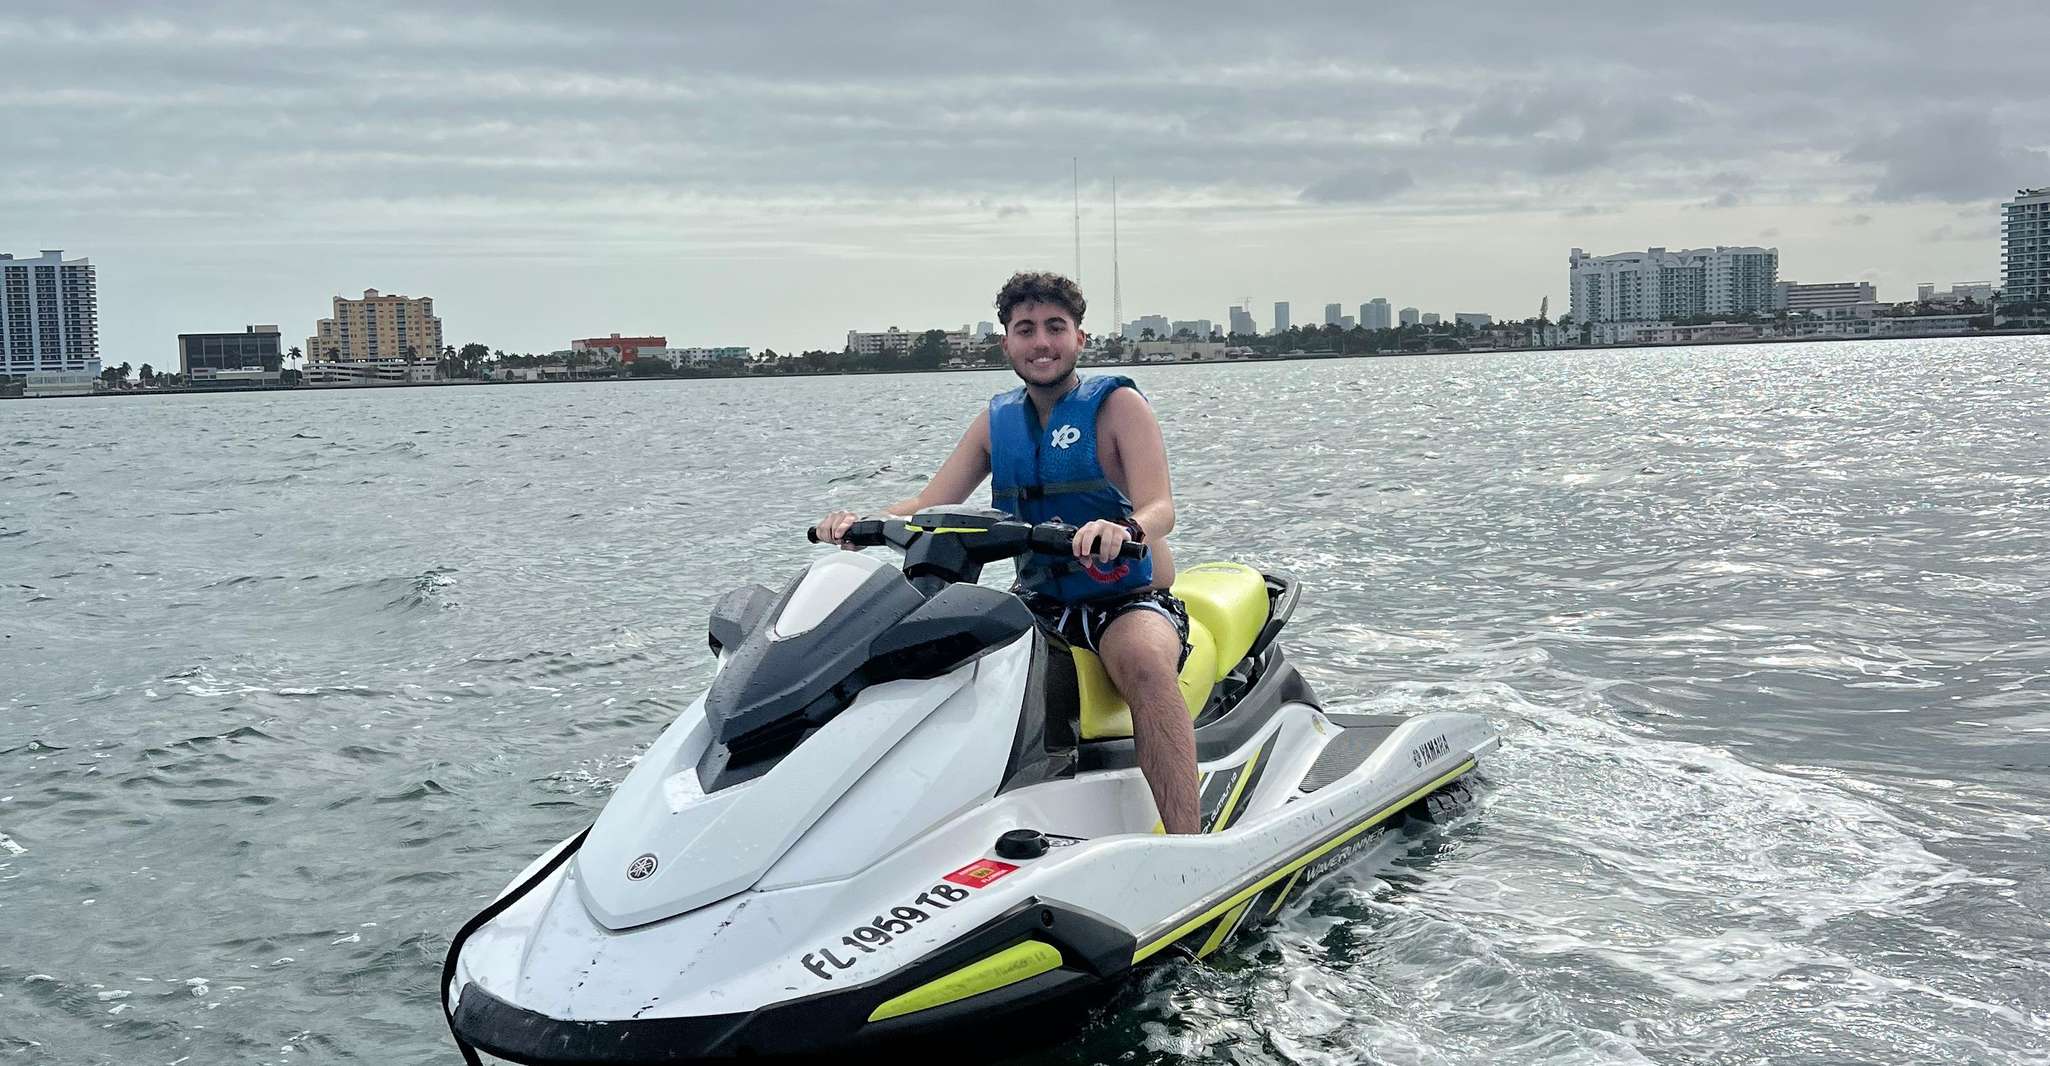 Miami, Miami Beach Jetski Ride with Boat and Drinks - Housity